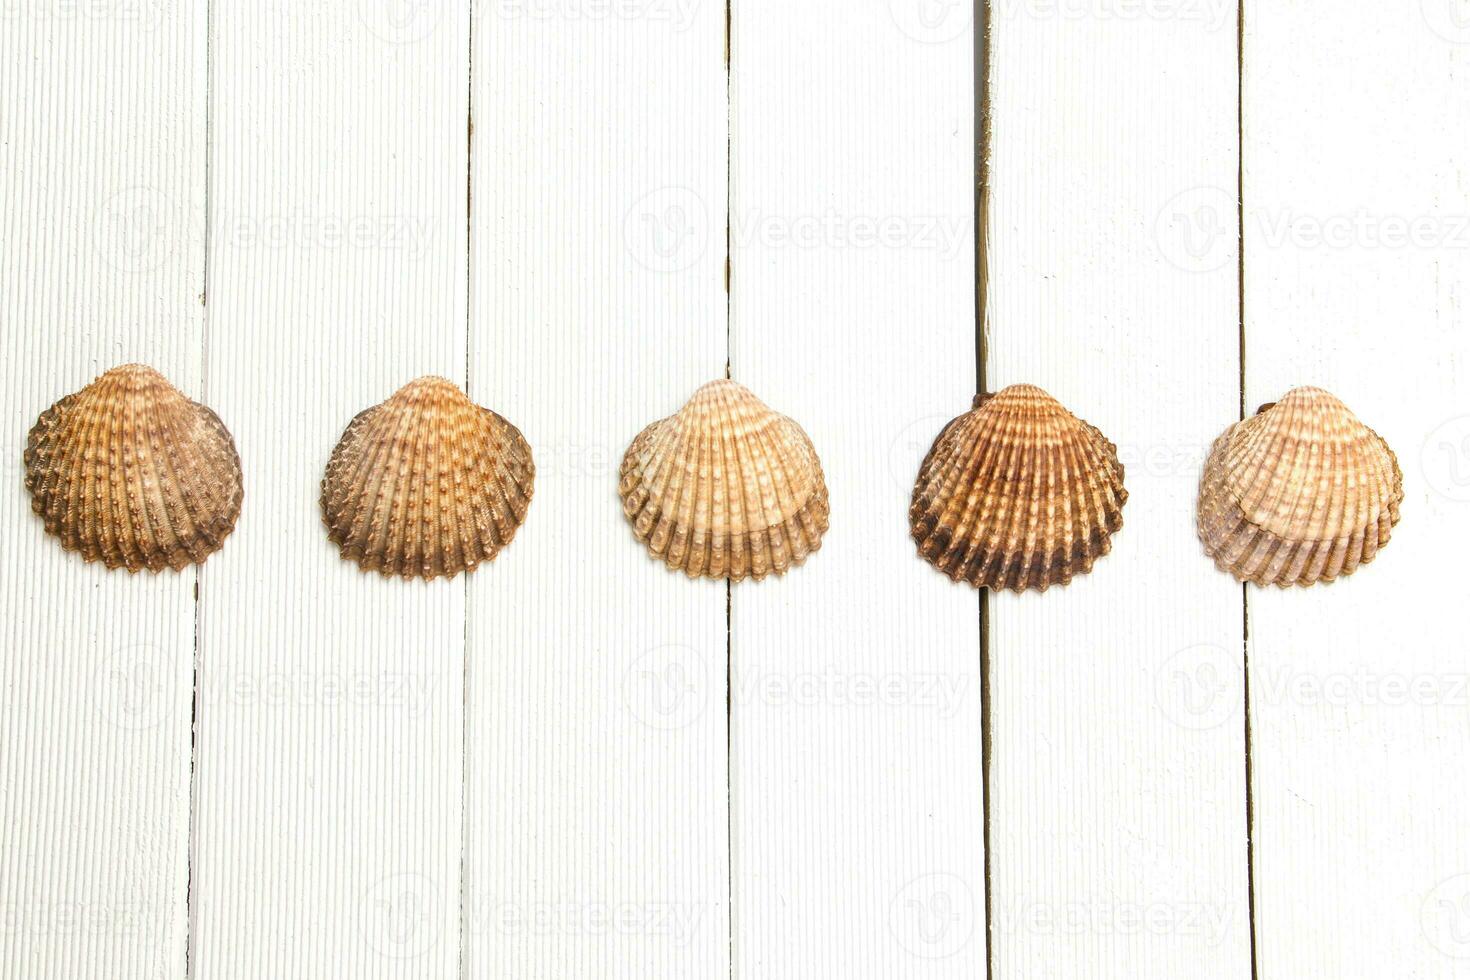 Several seashells aligned photo